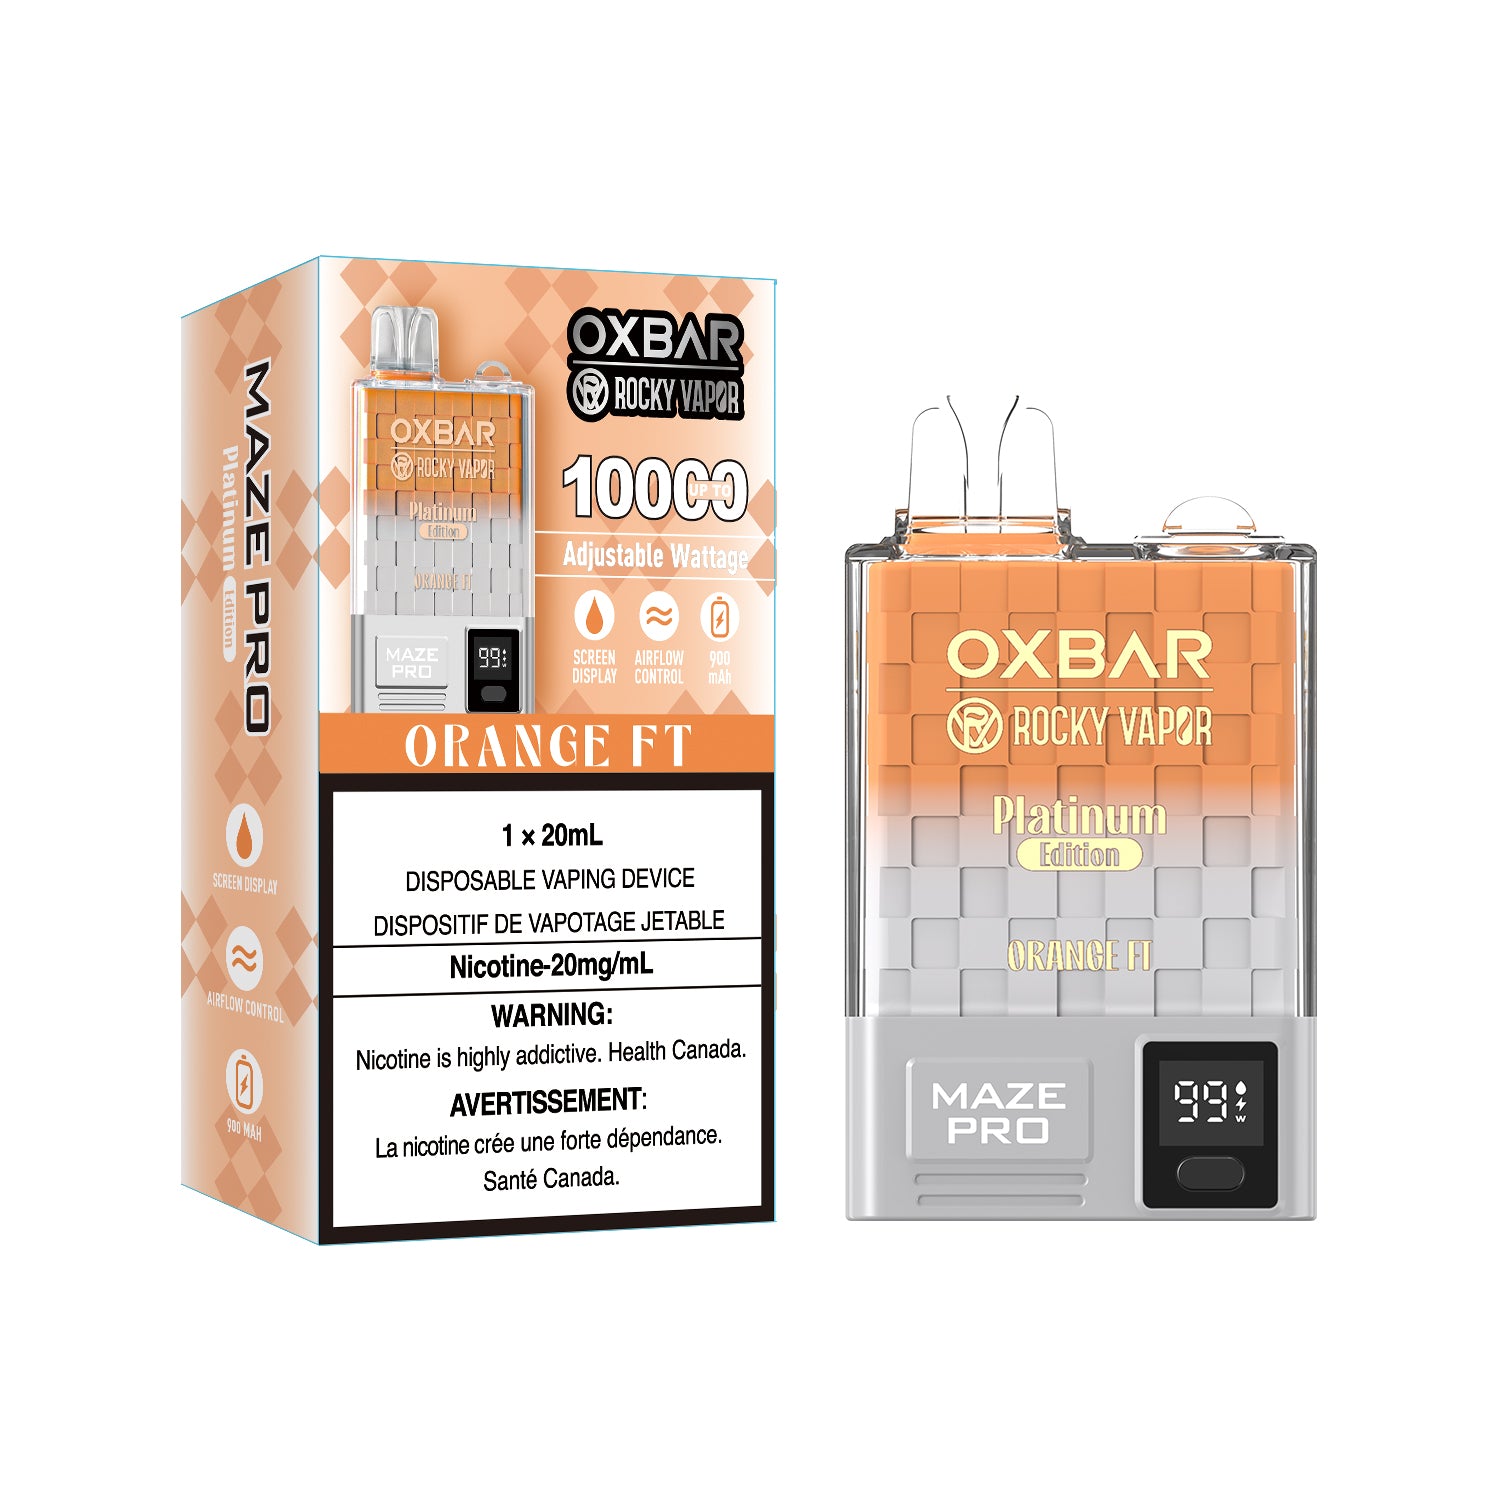 ORANGE FT - ROCKY VAPOR x OXBAR MAZE PRO - 20mg - 5pc/box